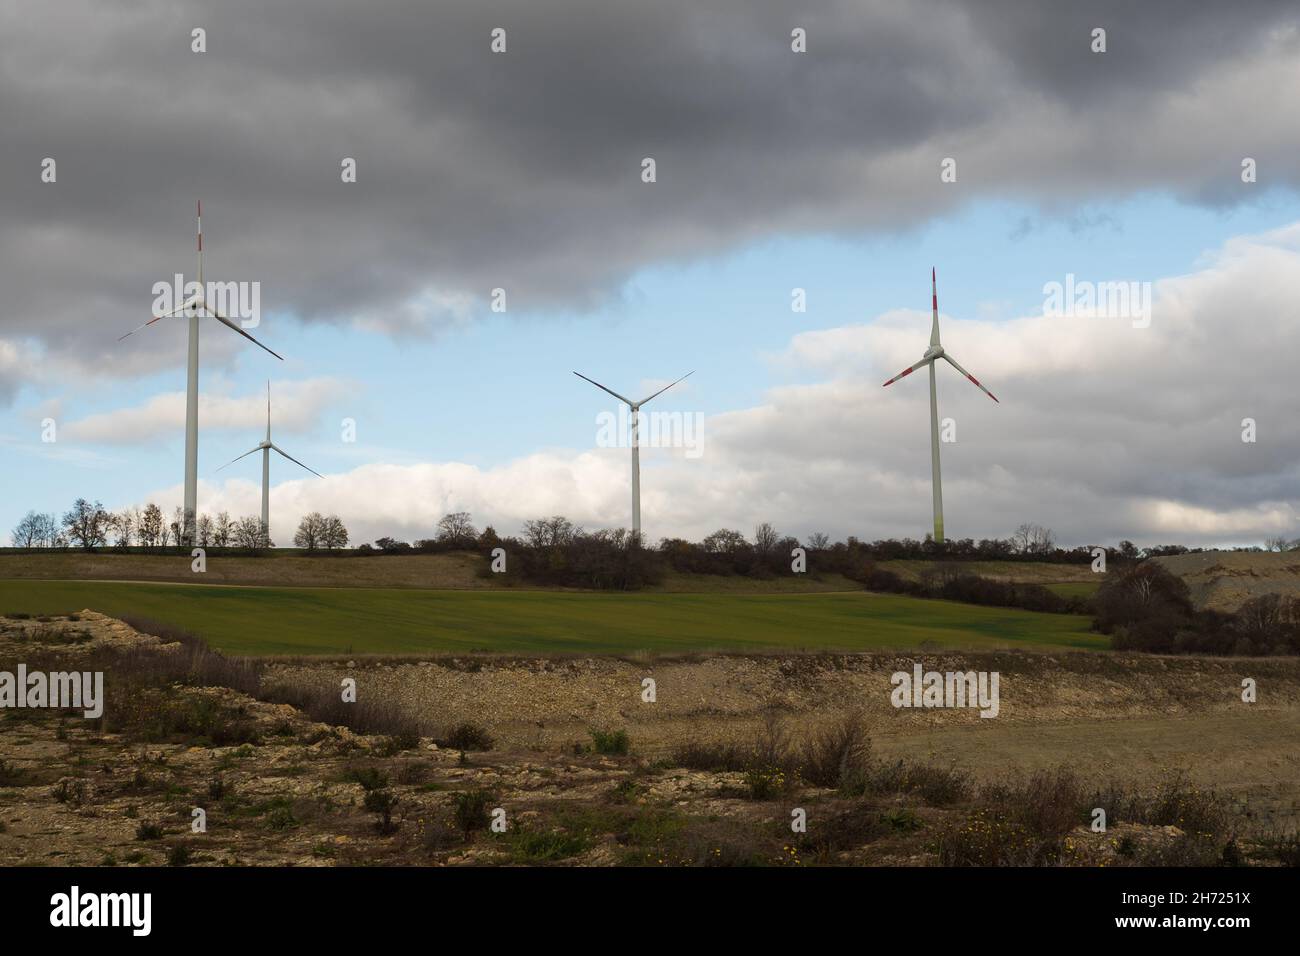 windmills bucha thuringia energy power politics background Stock Photo